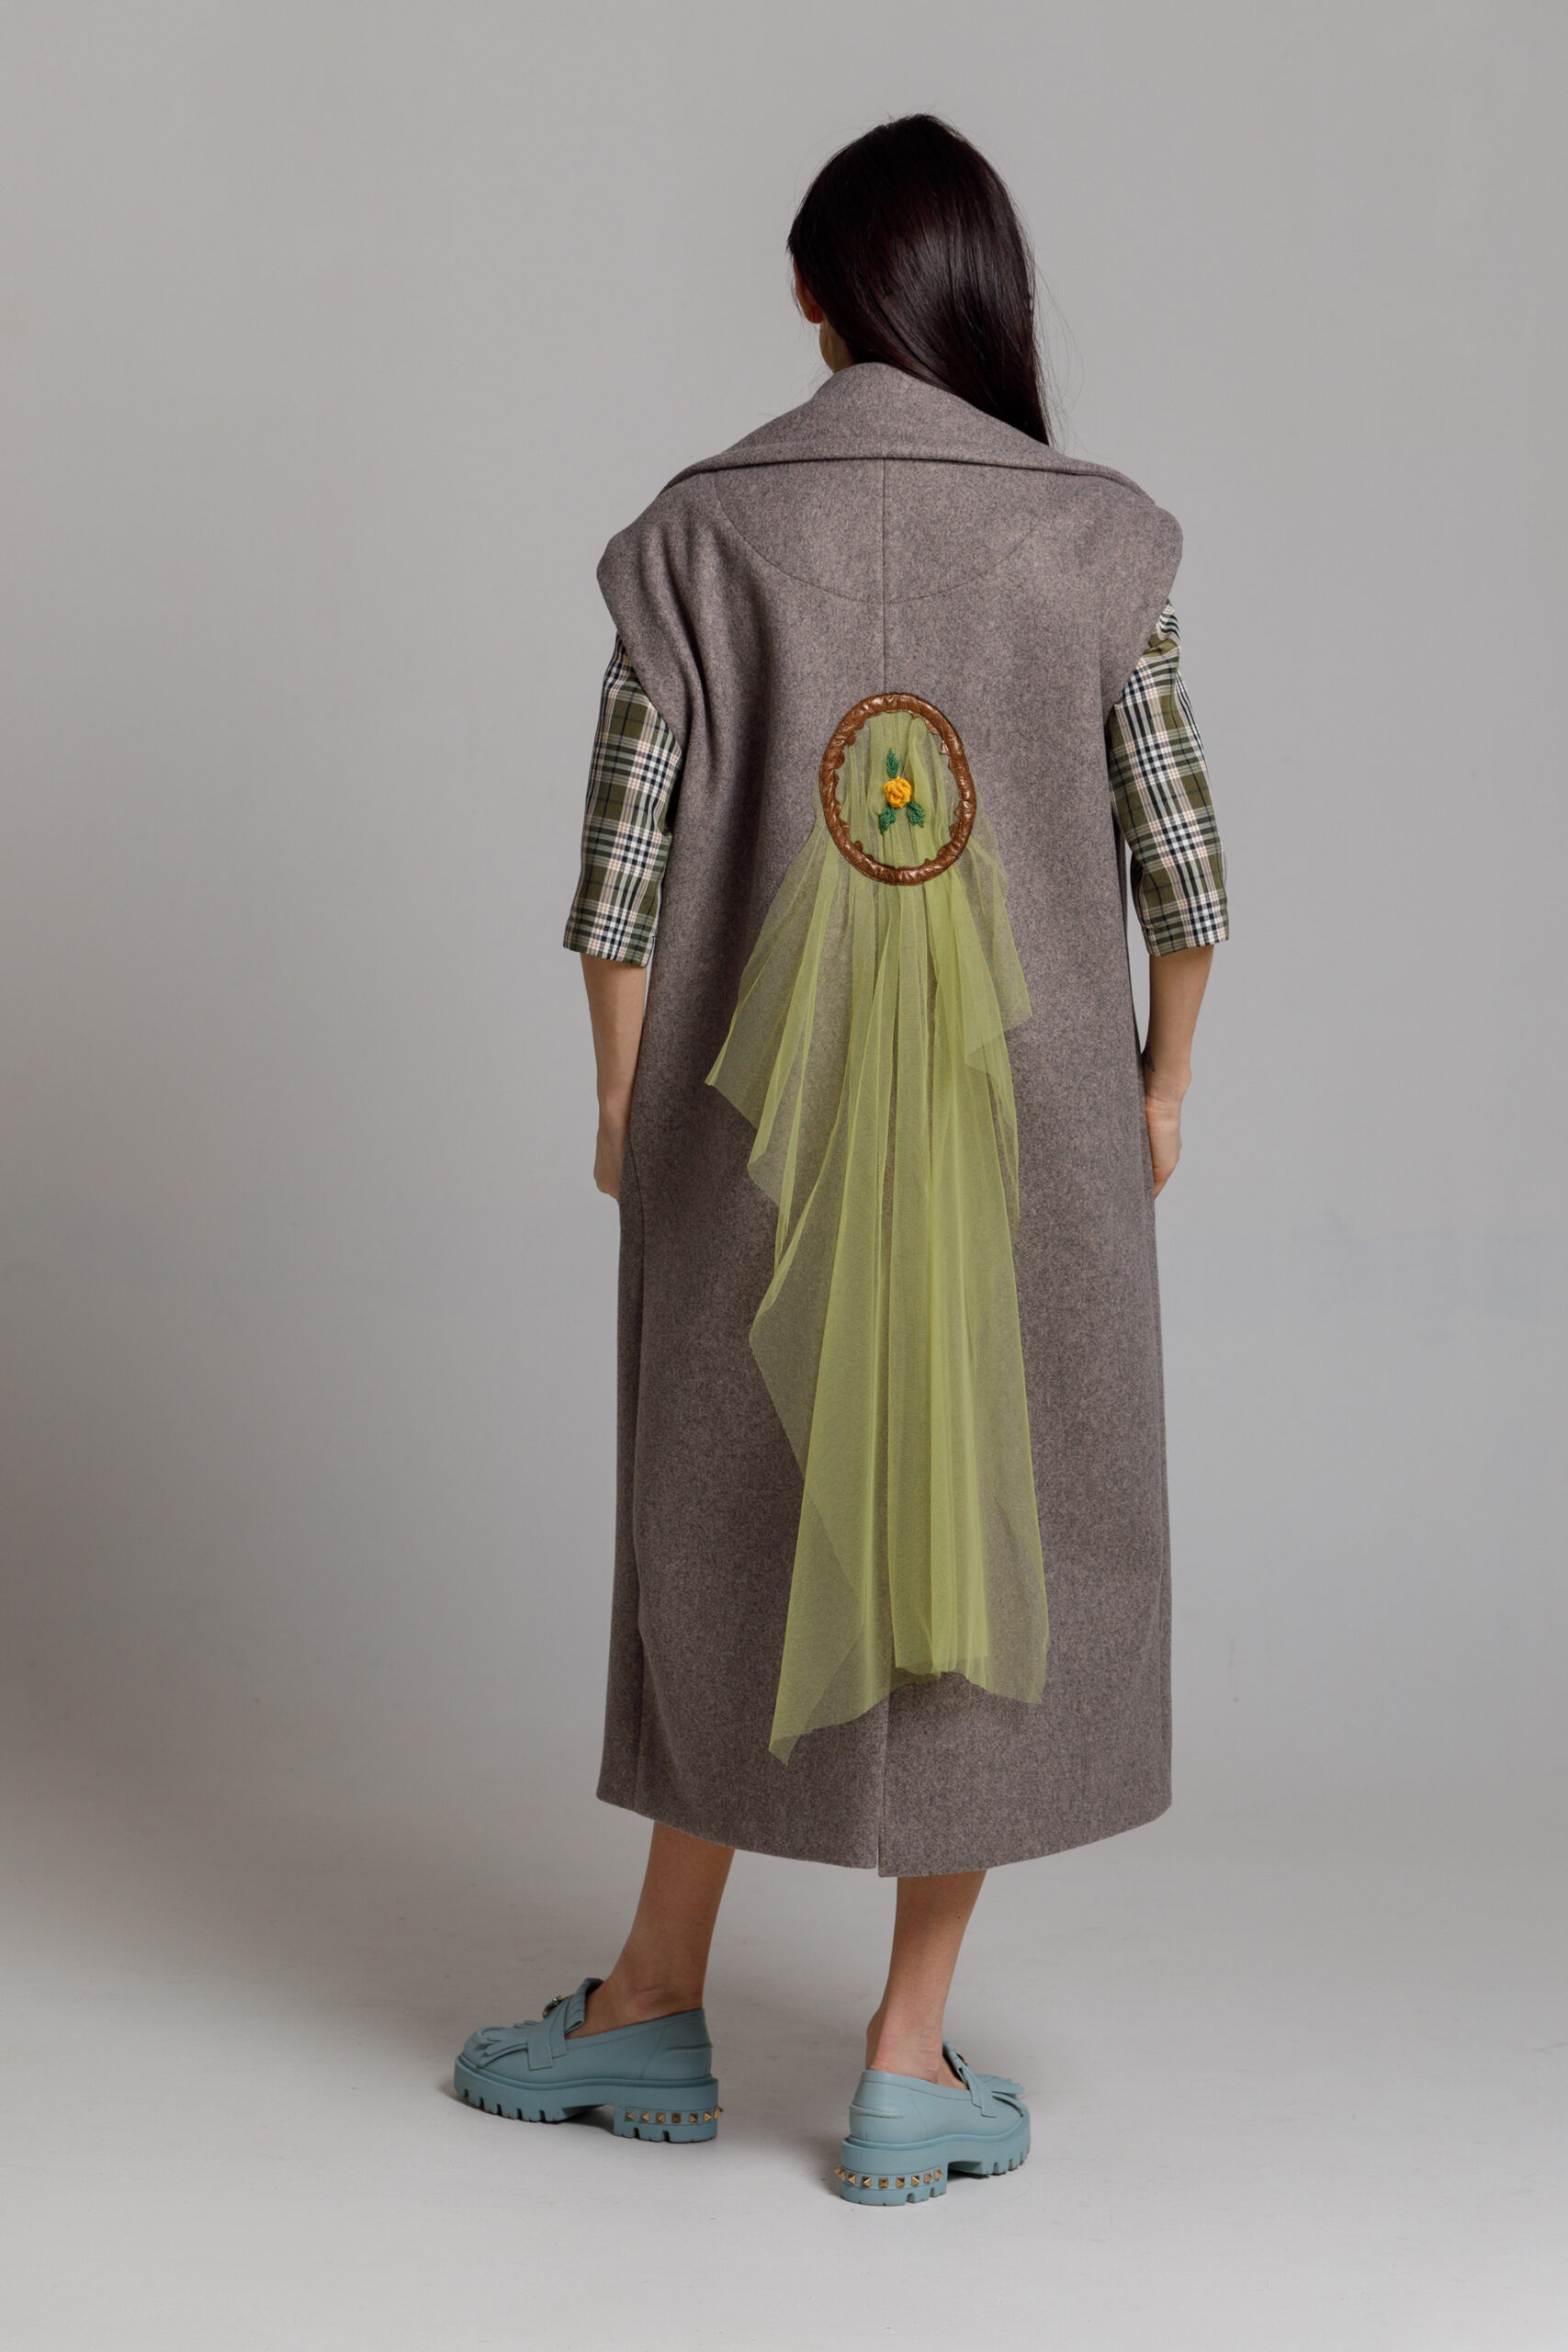 Vesta KAIDA gri, din stofa cu aplicatie tul. Materiale naturale, design unicat, cu broderie si aplicatii handmade